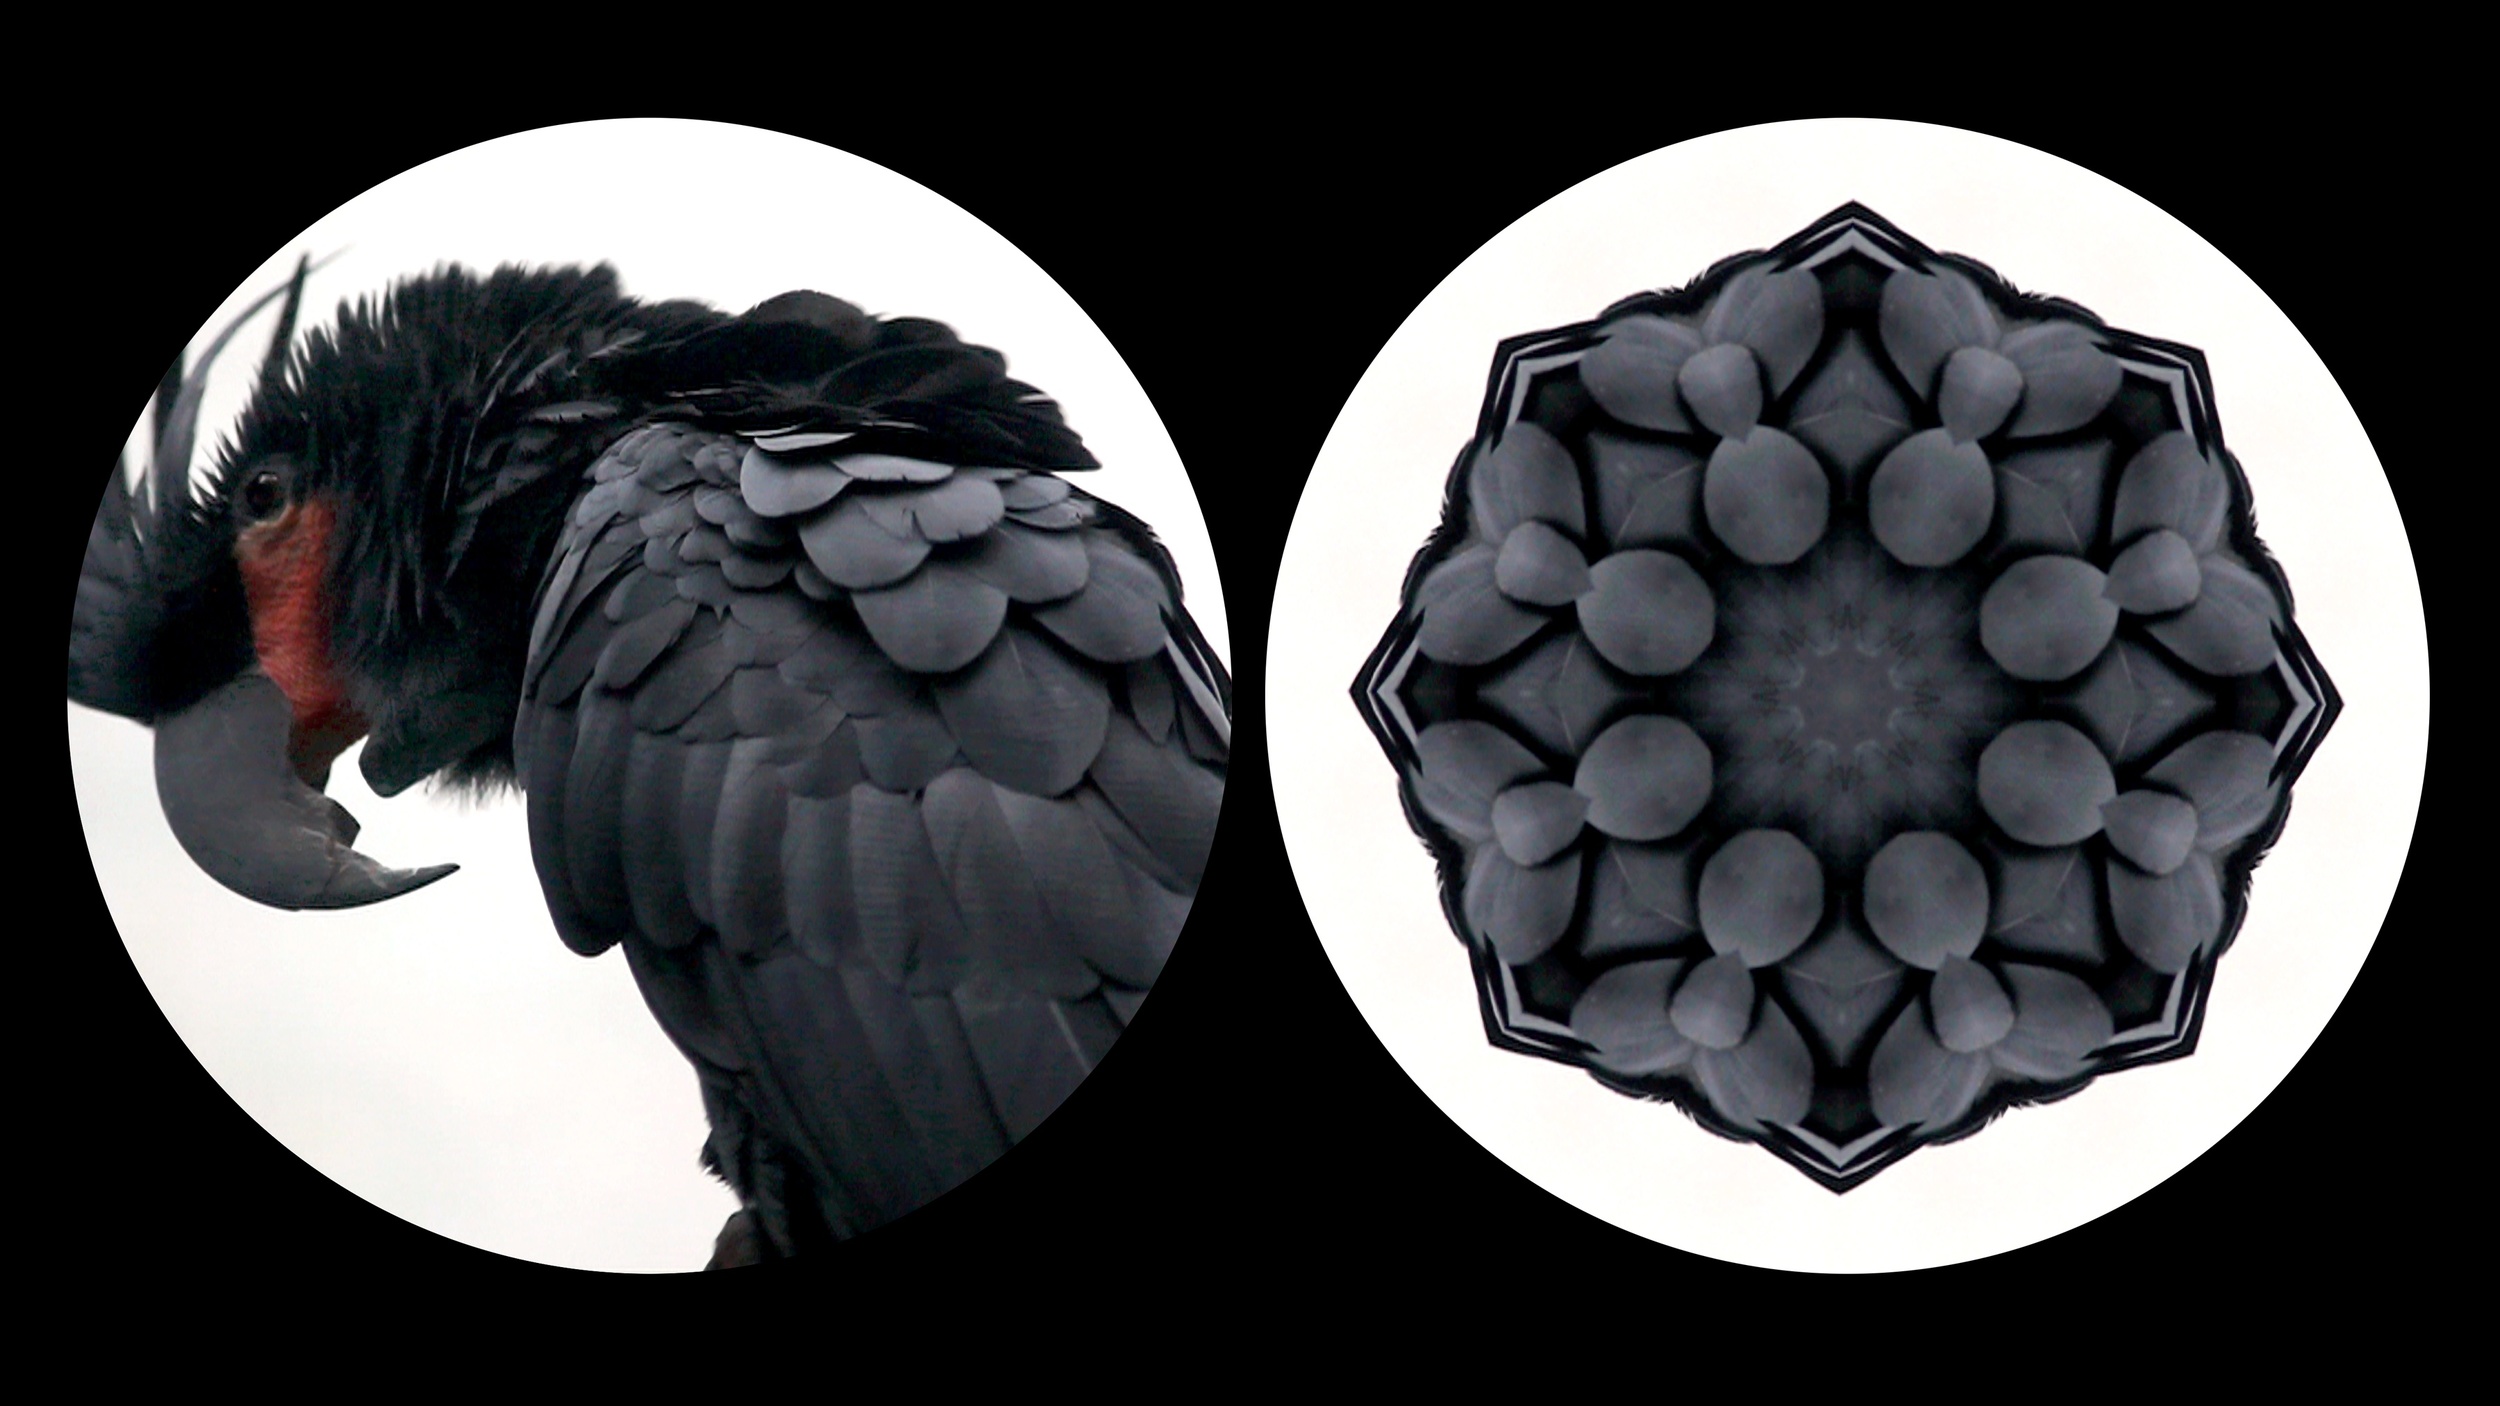  Leslie Thornton  Binocular Series: Black Parrot, HD video, 4min. 2012 